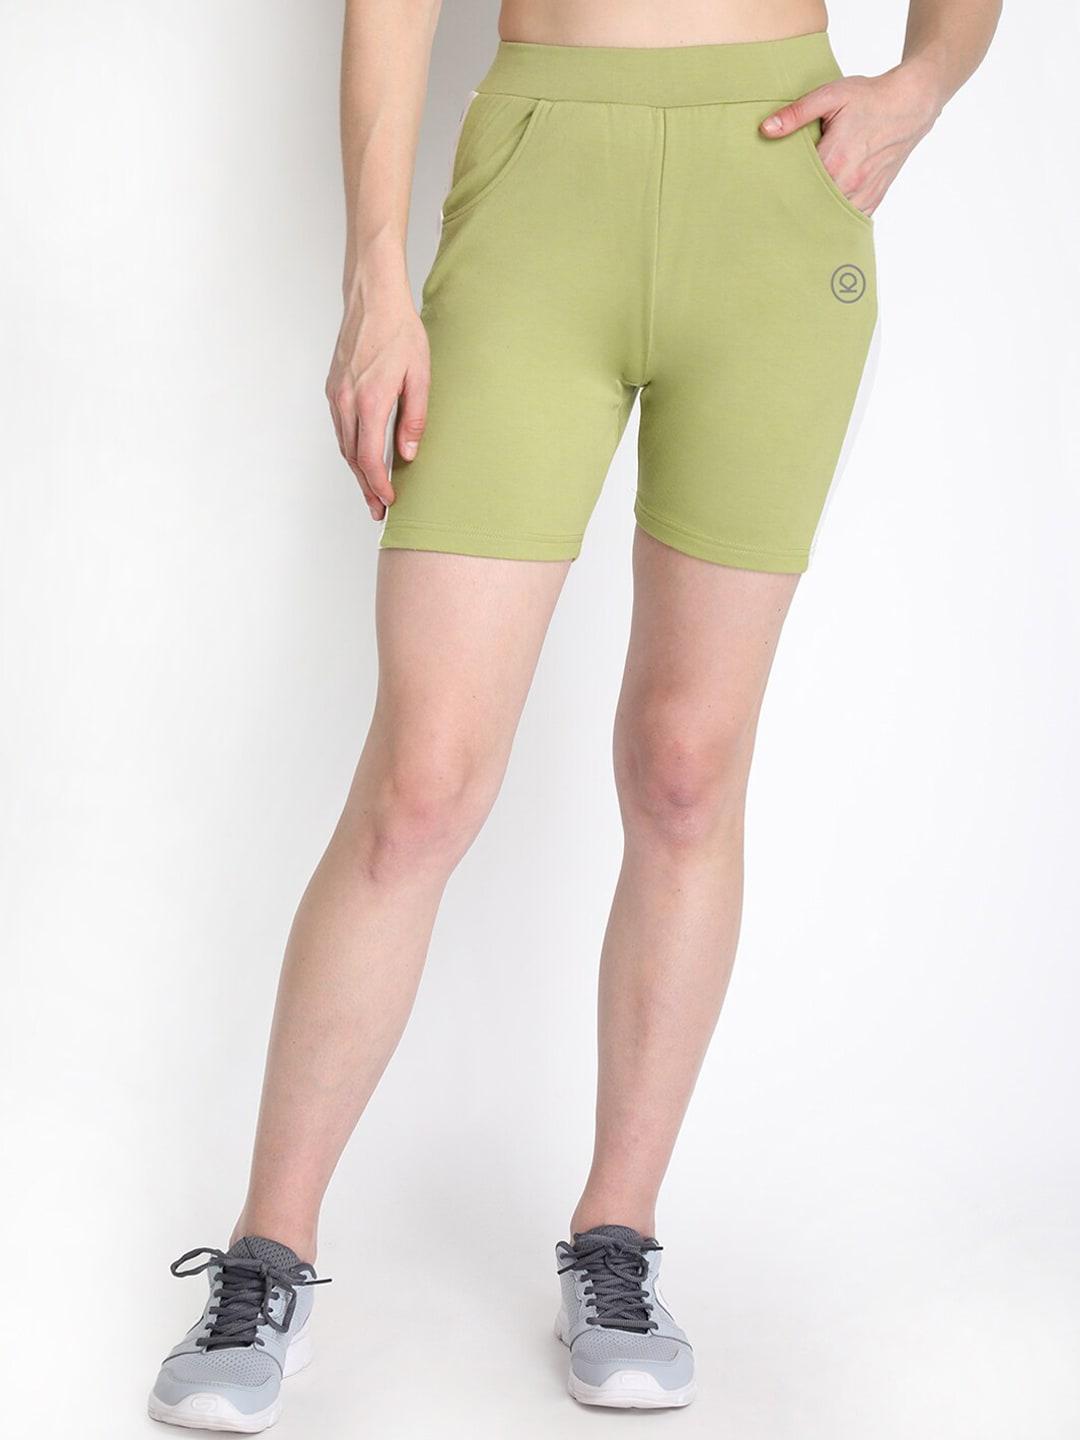 chkokko woman green slim fit training or gym sports shorts